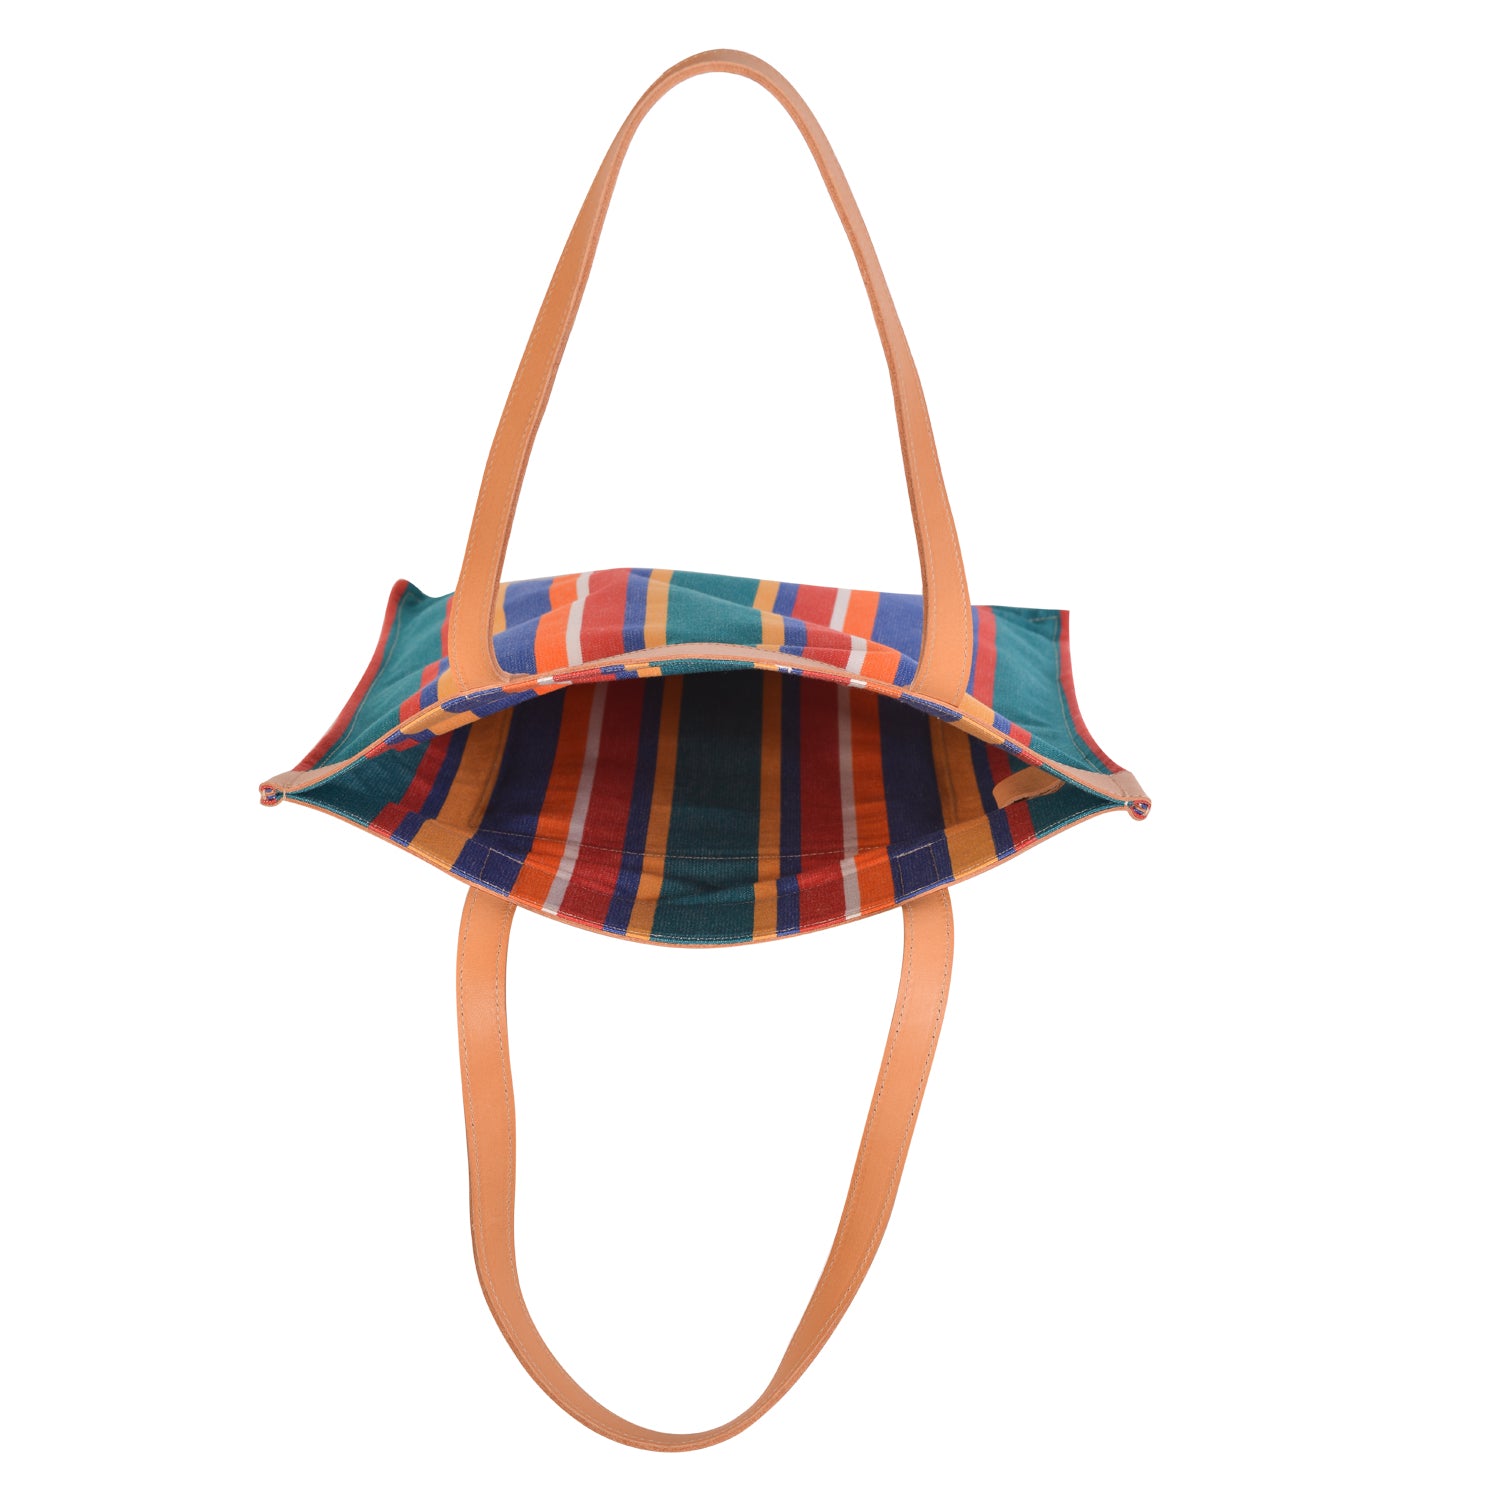 Cesta Braided Canvas Tote in Natural & Navy Stripe - Meghan Markle's  Handbags - Meghan's Fashion